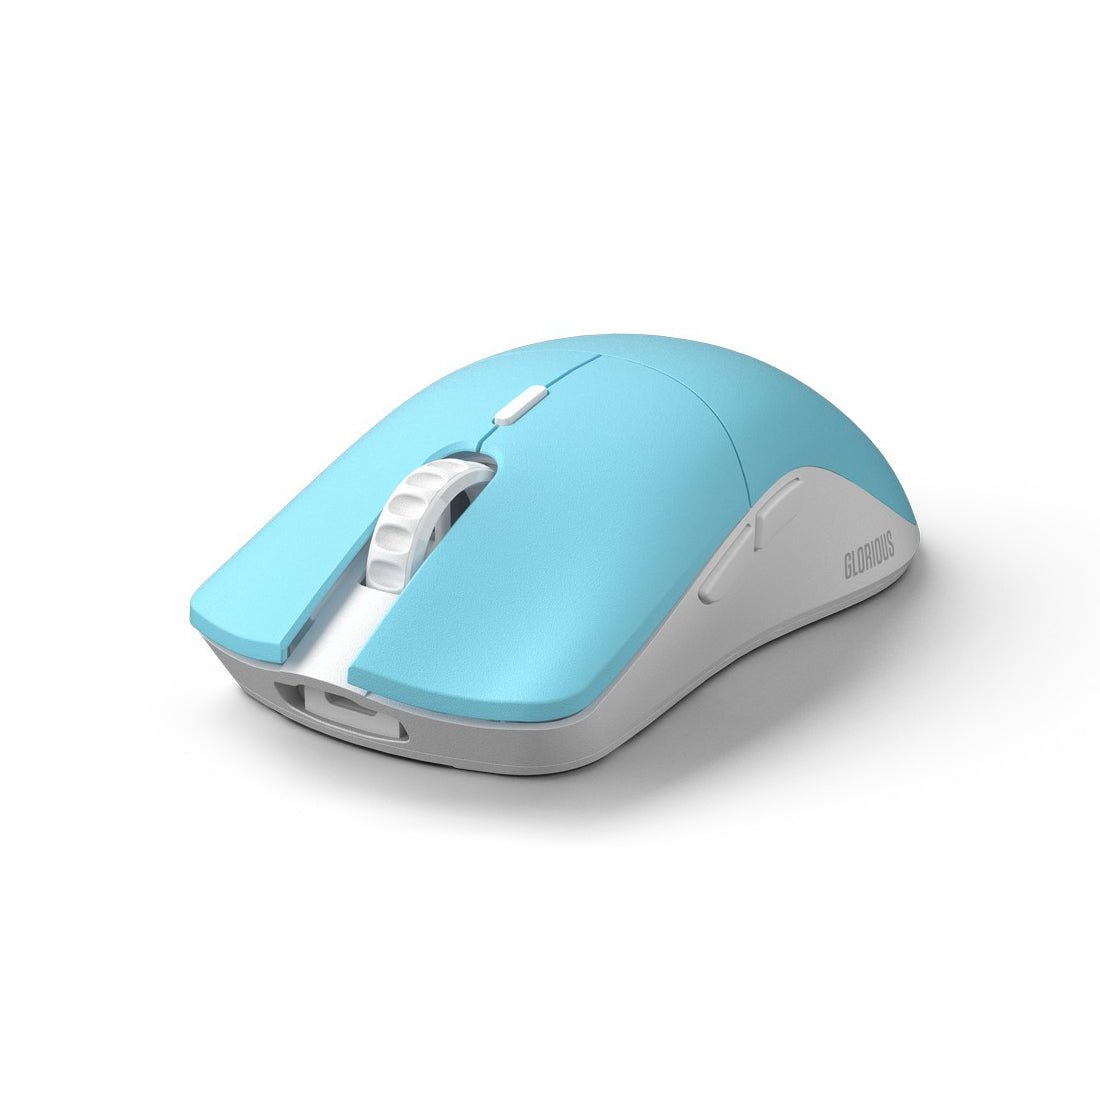 Glorious Model O PRO Wireless Mouse - Blue Lynx - فأرة - Store 974 | ستور ٩٧٤